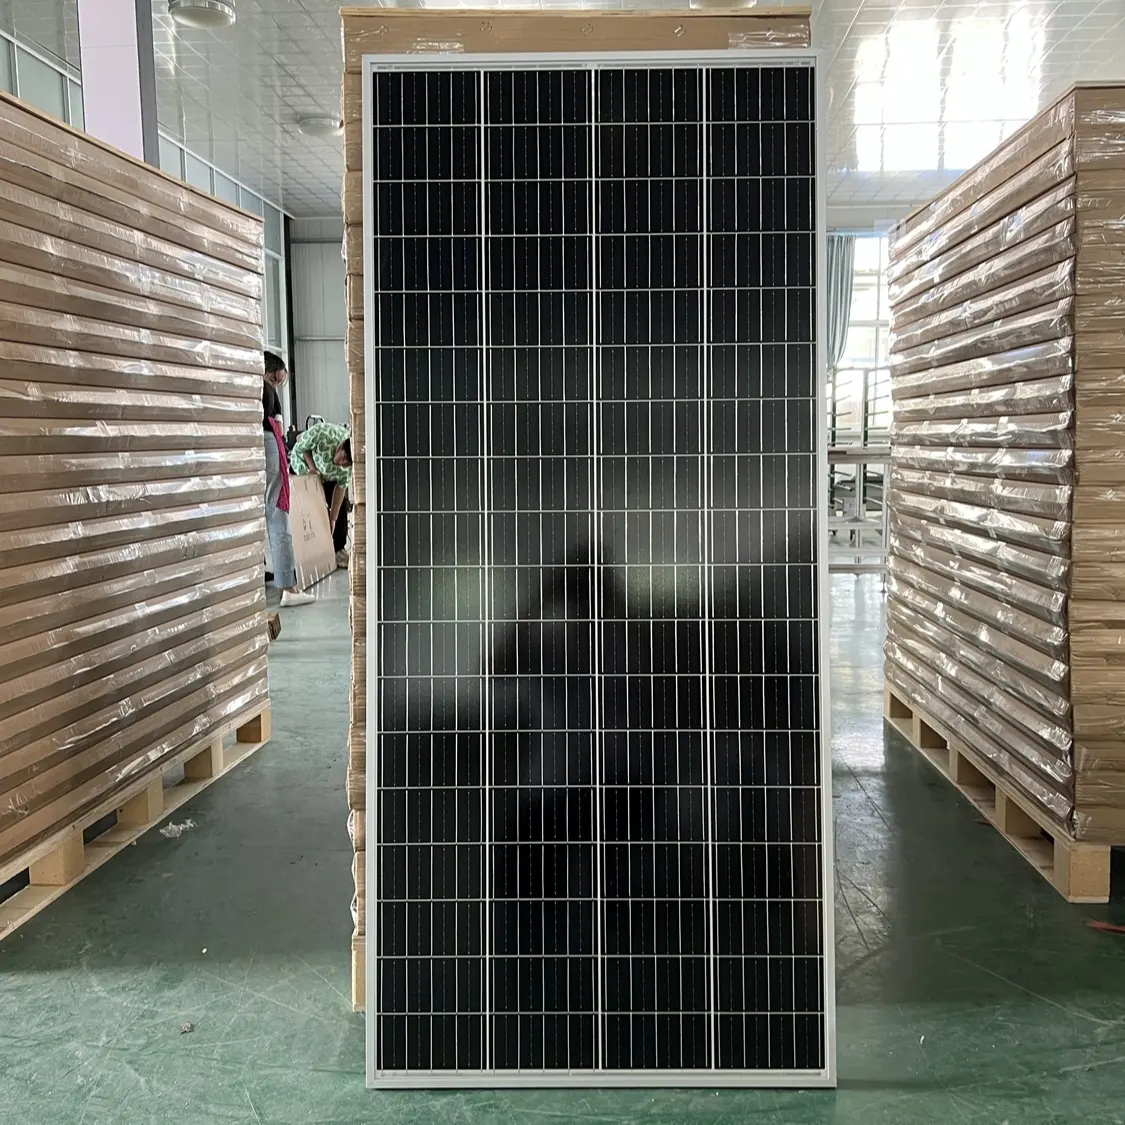 Bestseller hochwertiges Mono-Solar-PV-Modul Fabrik Direkt vertrieb 100W-500W Panel